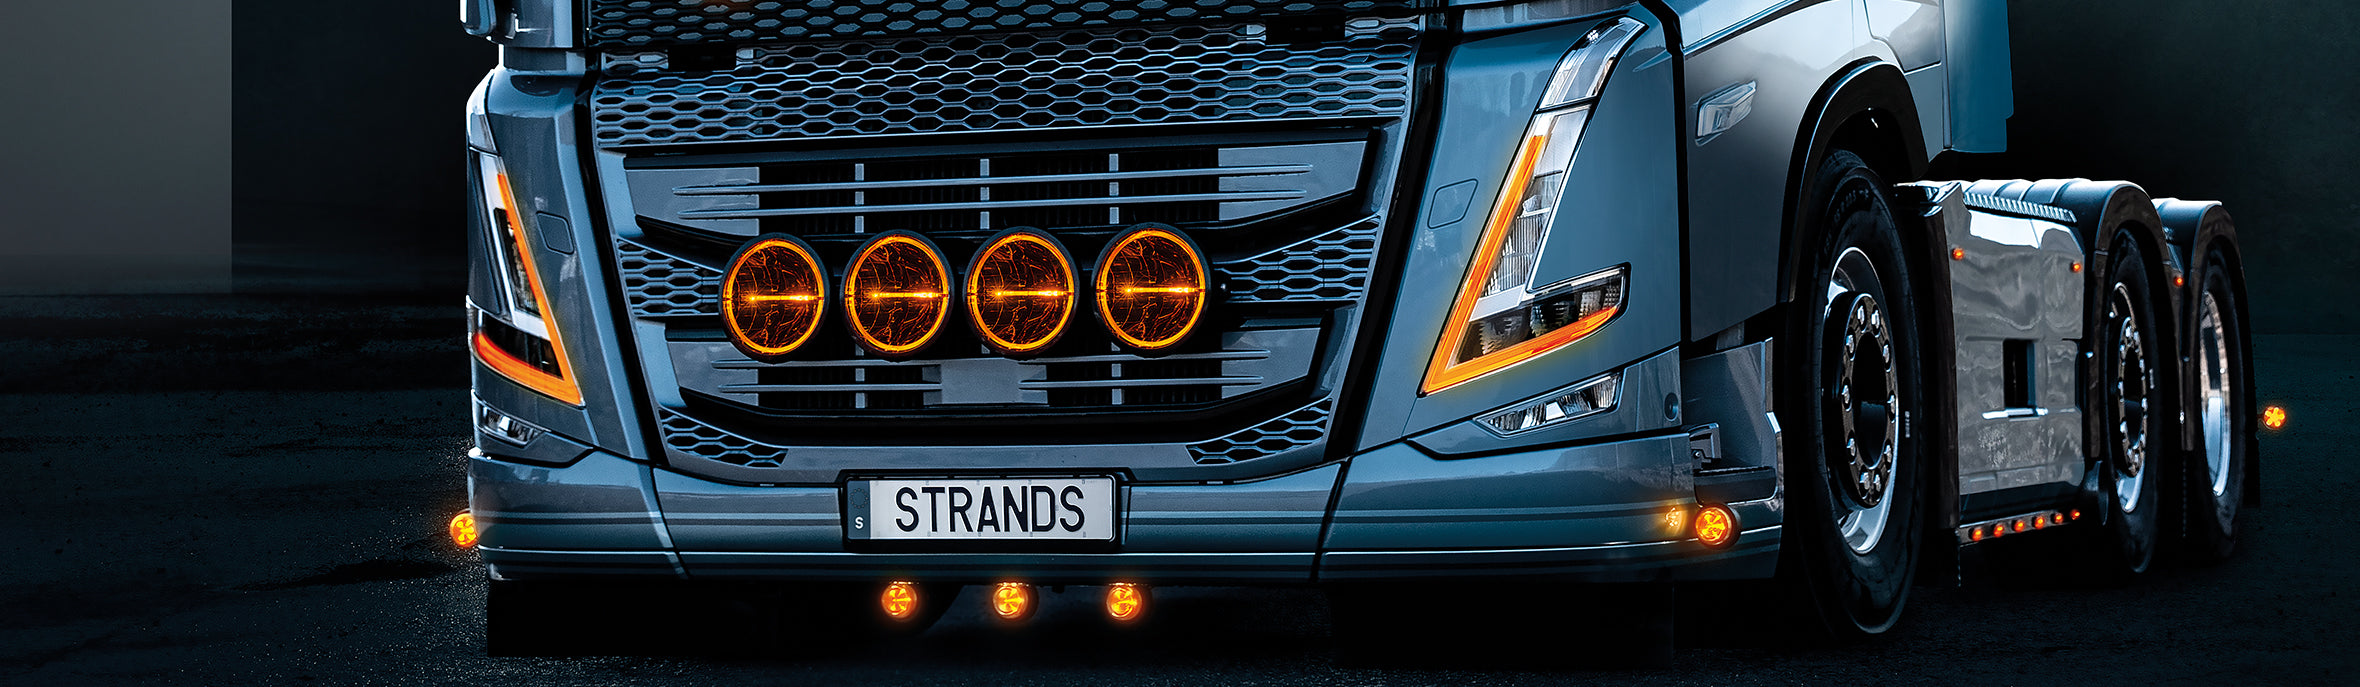 strands ambassador spot lights